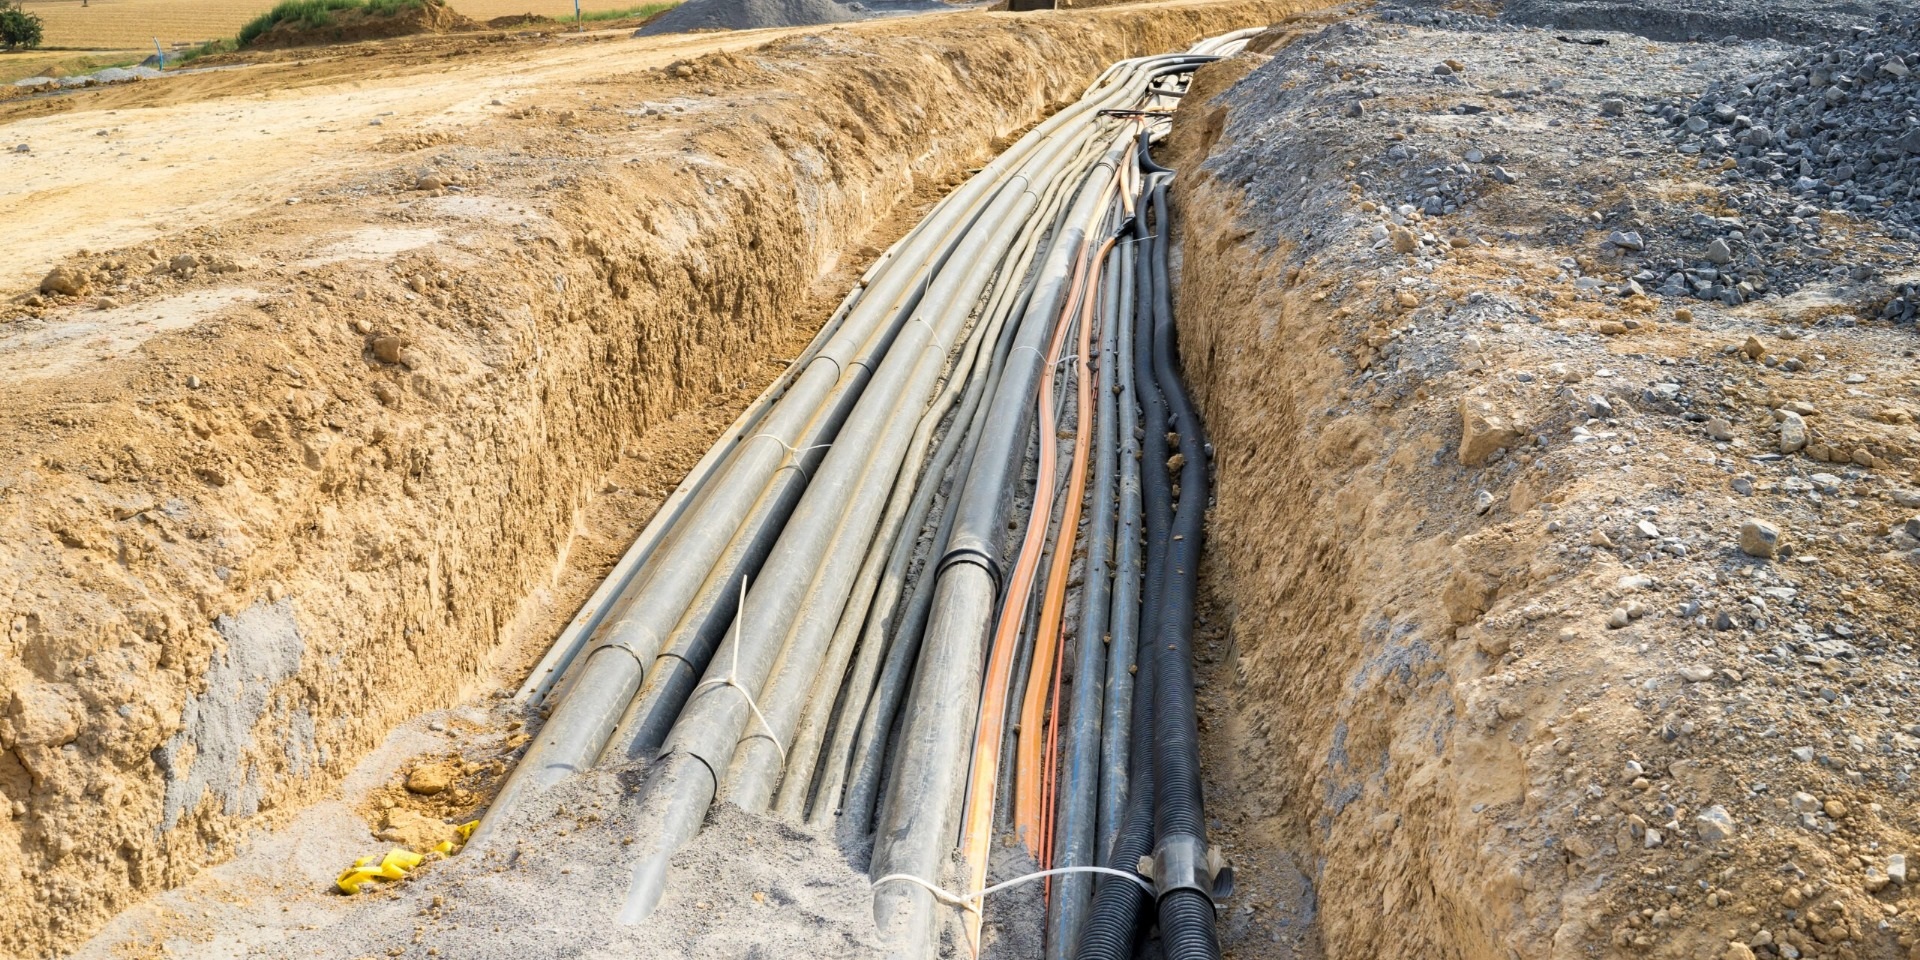 Burying cables underground